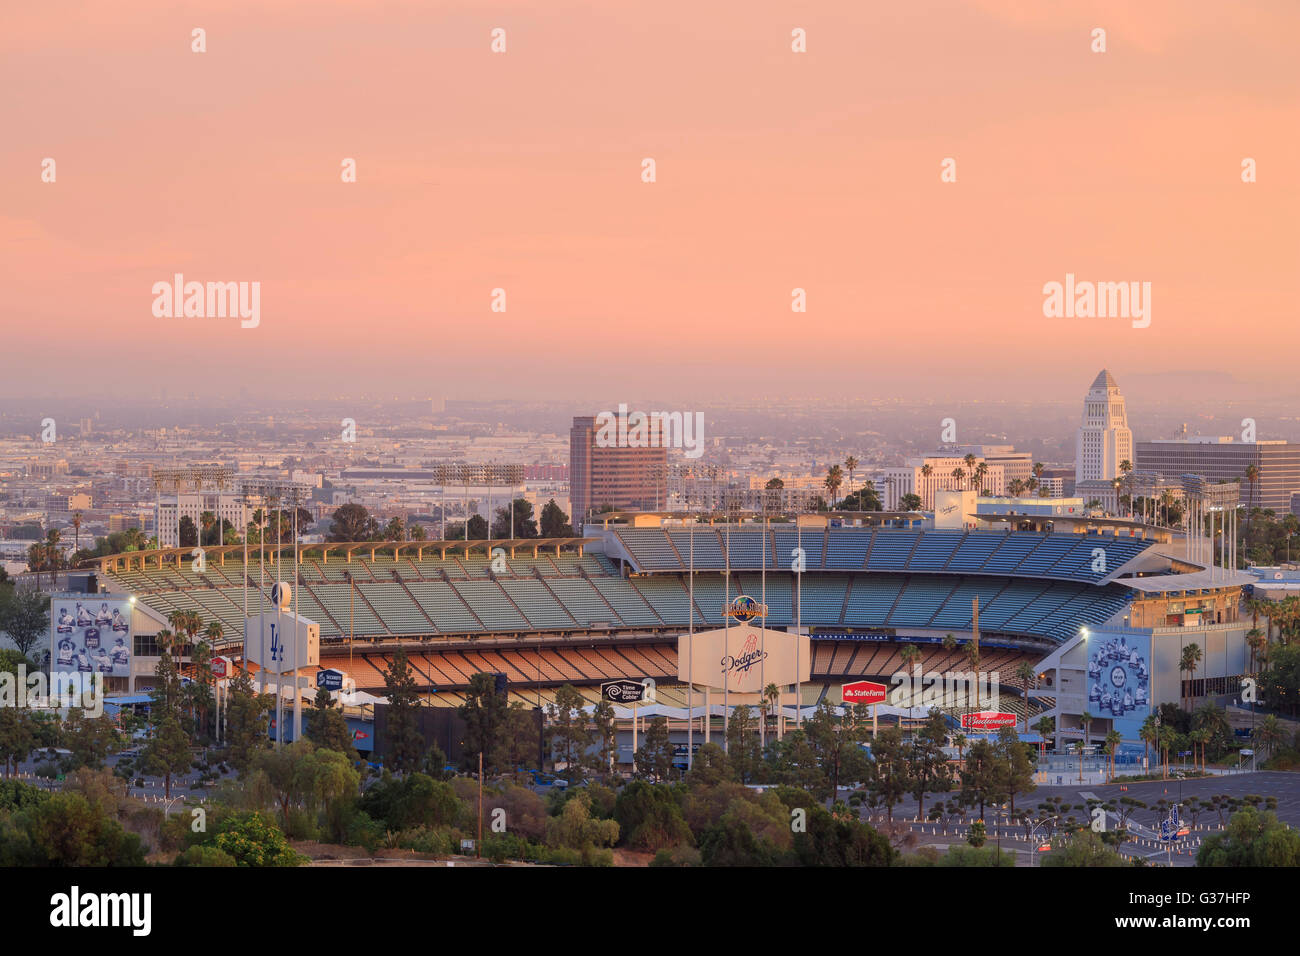 Download Los Angeles Dodgers Stadium Wallpaper